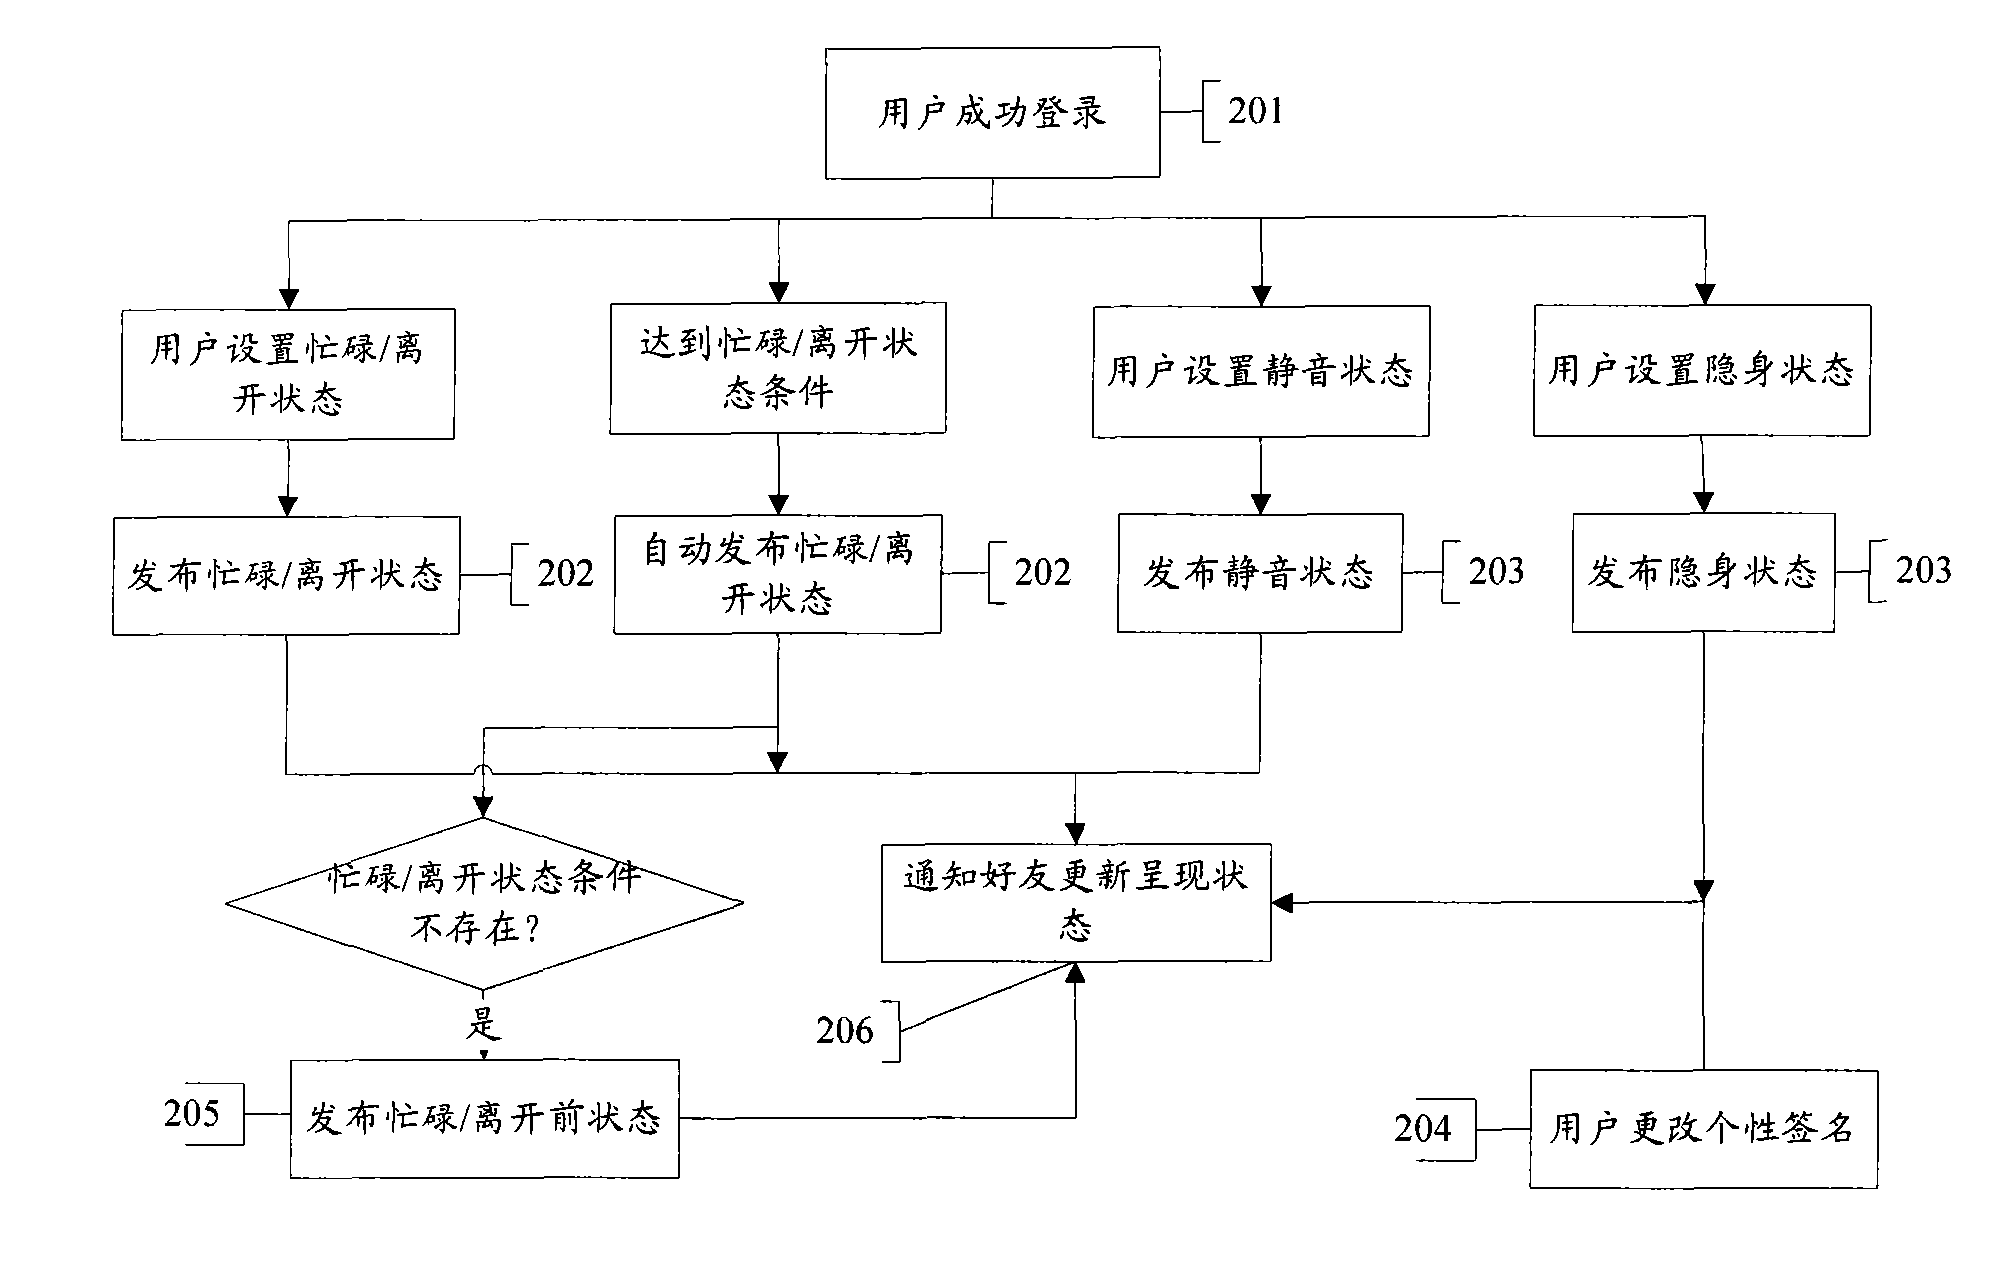 Information presentation method based on PoC